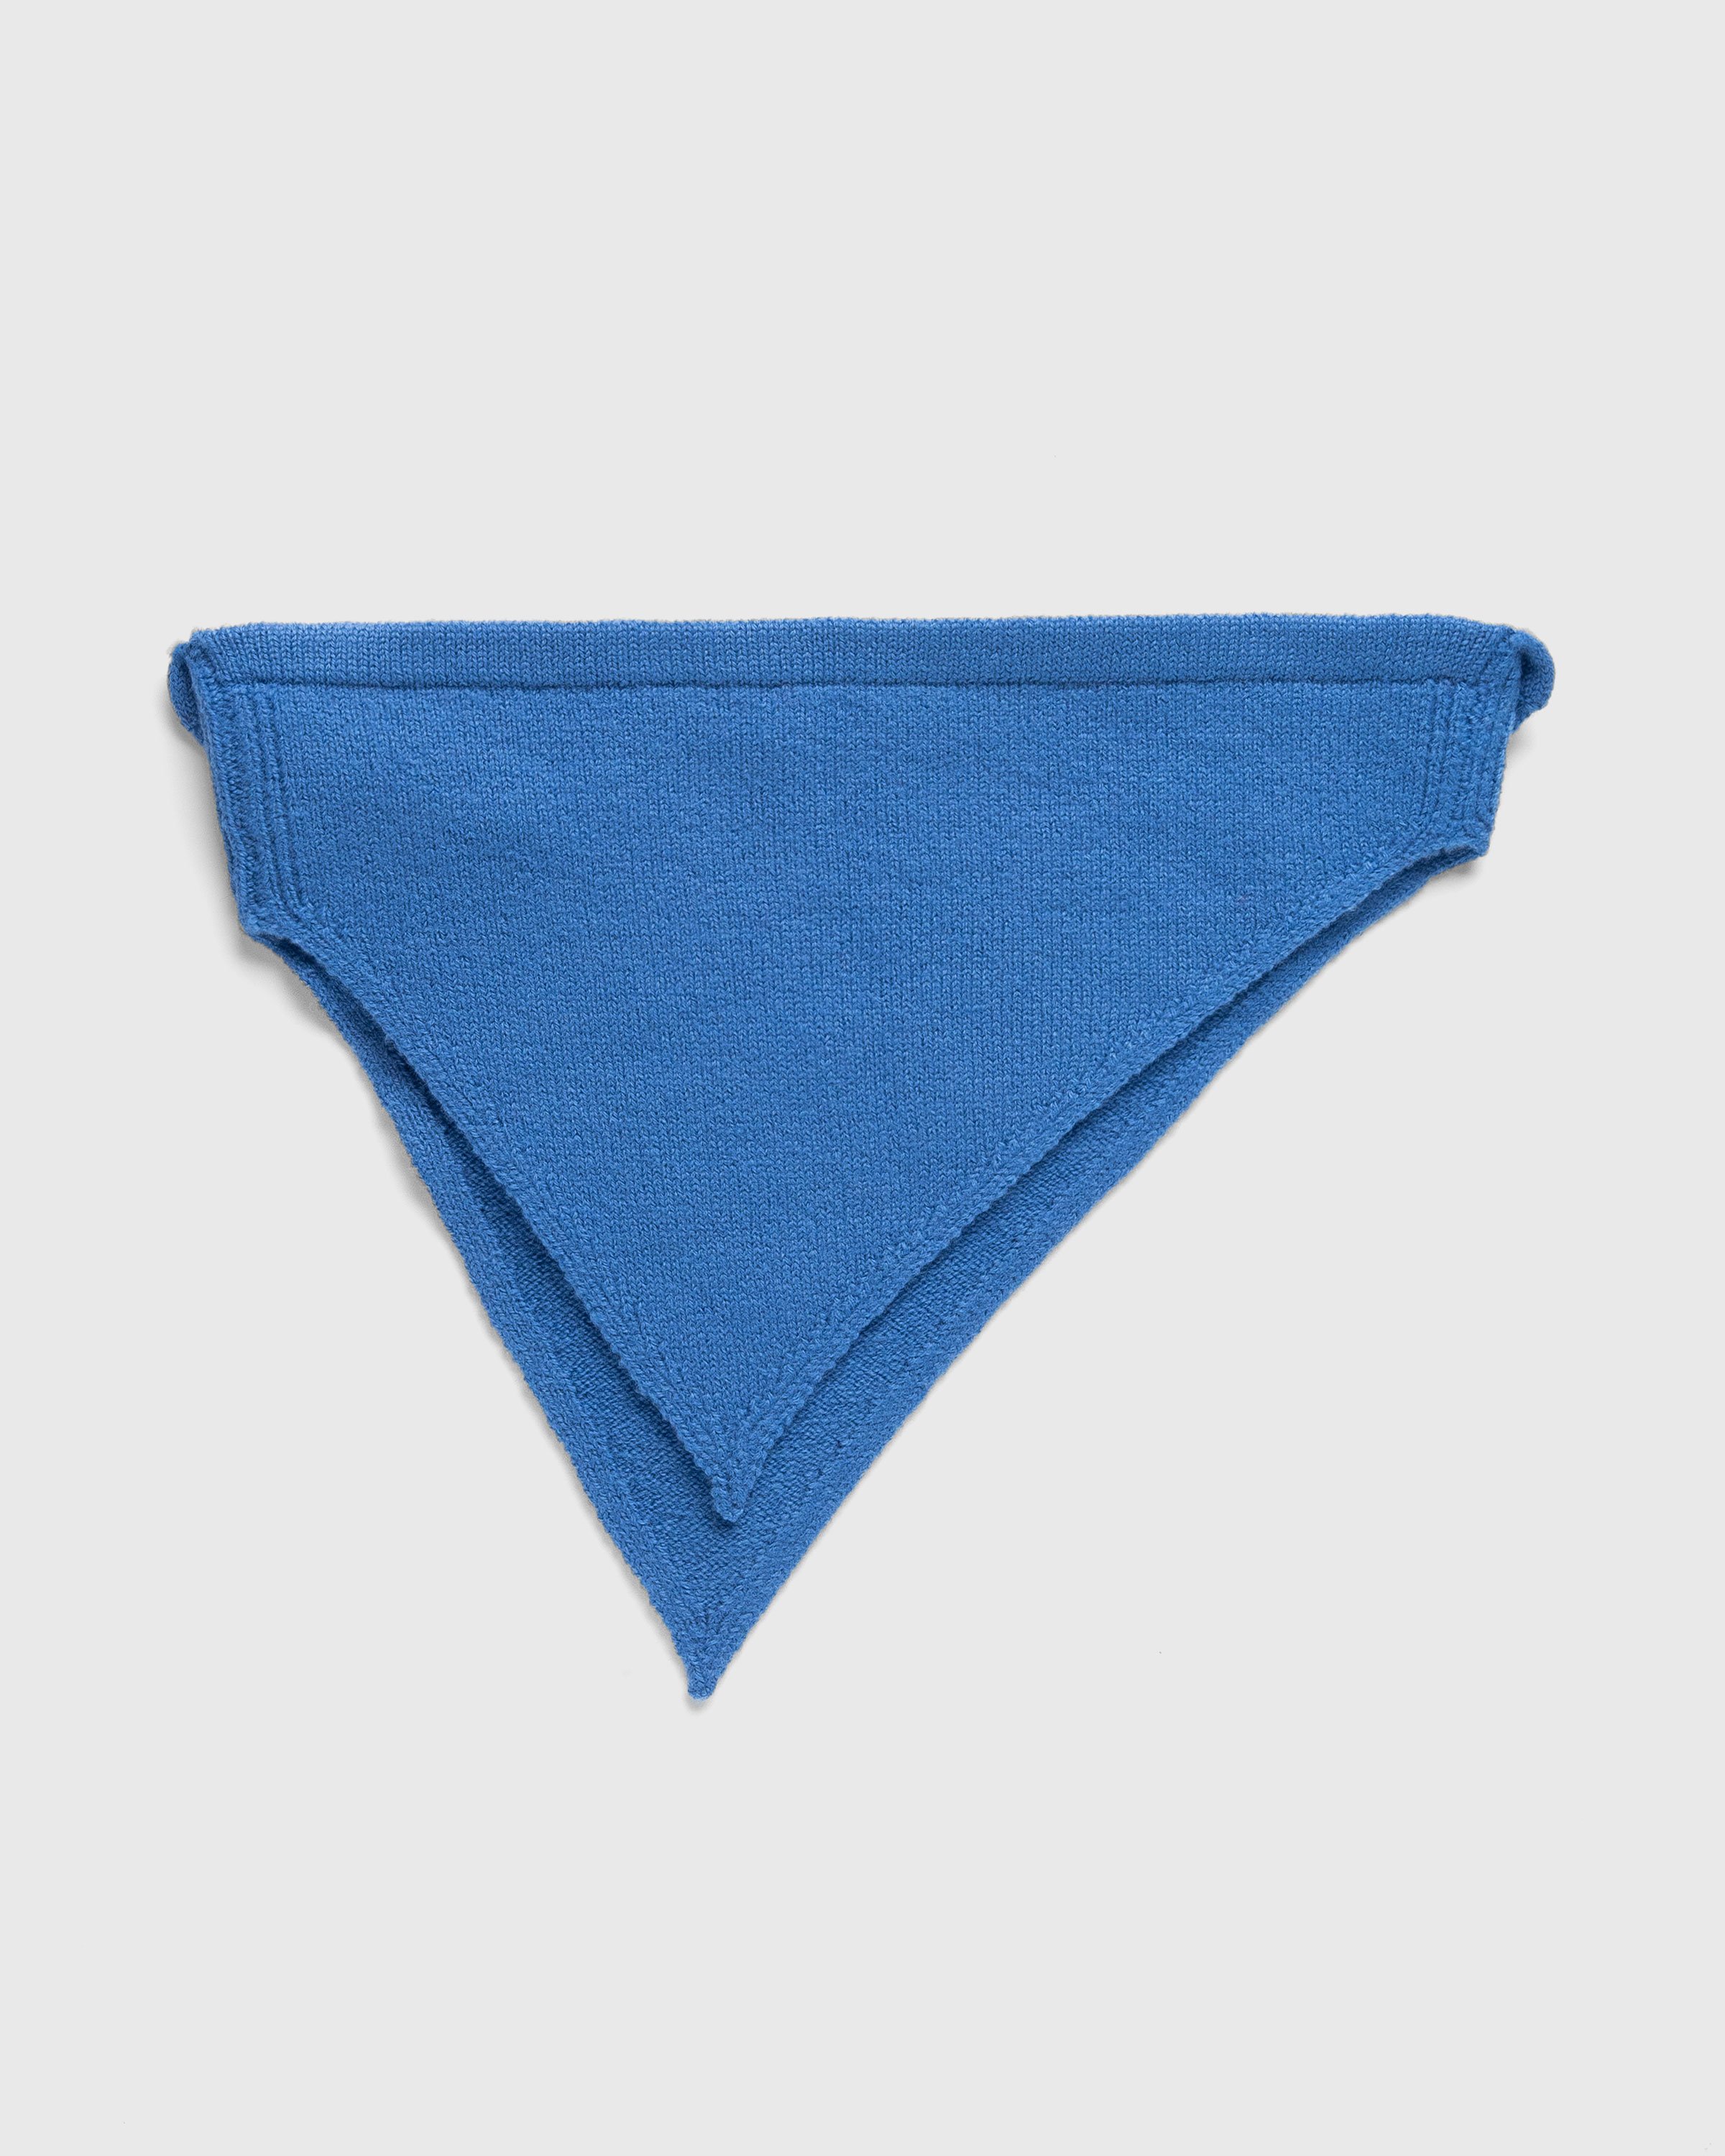 Jil Sander - Merino Foulard Cornflower - Accessories - Blue - Image 2